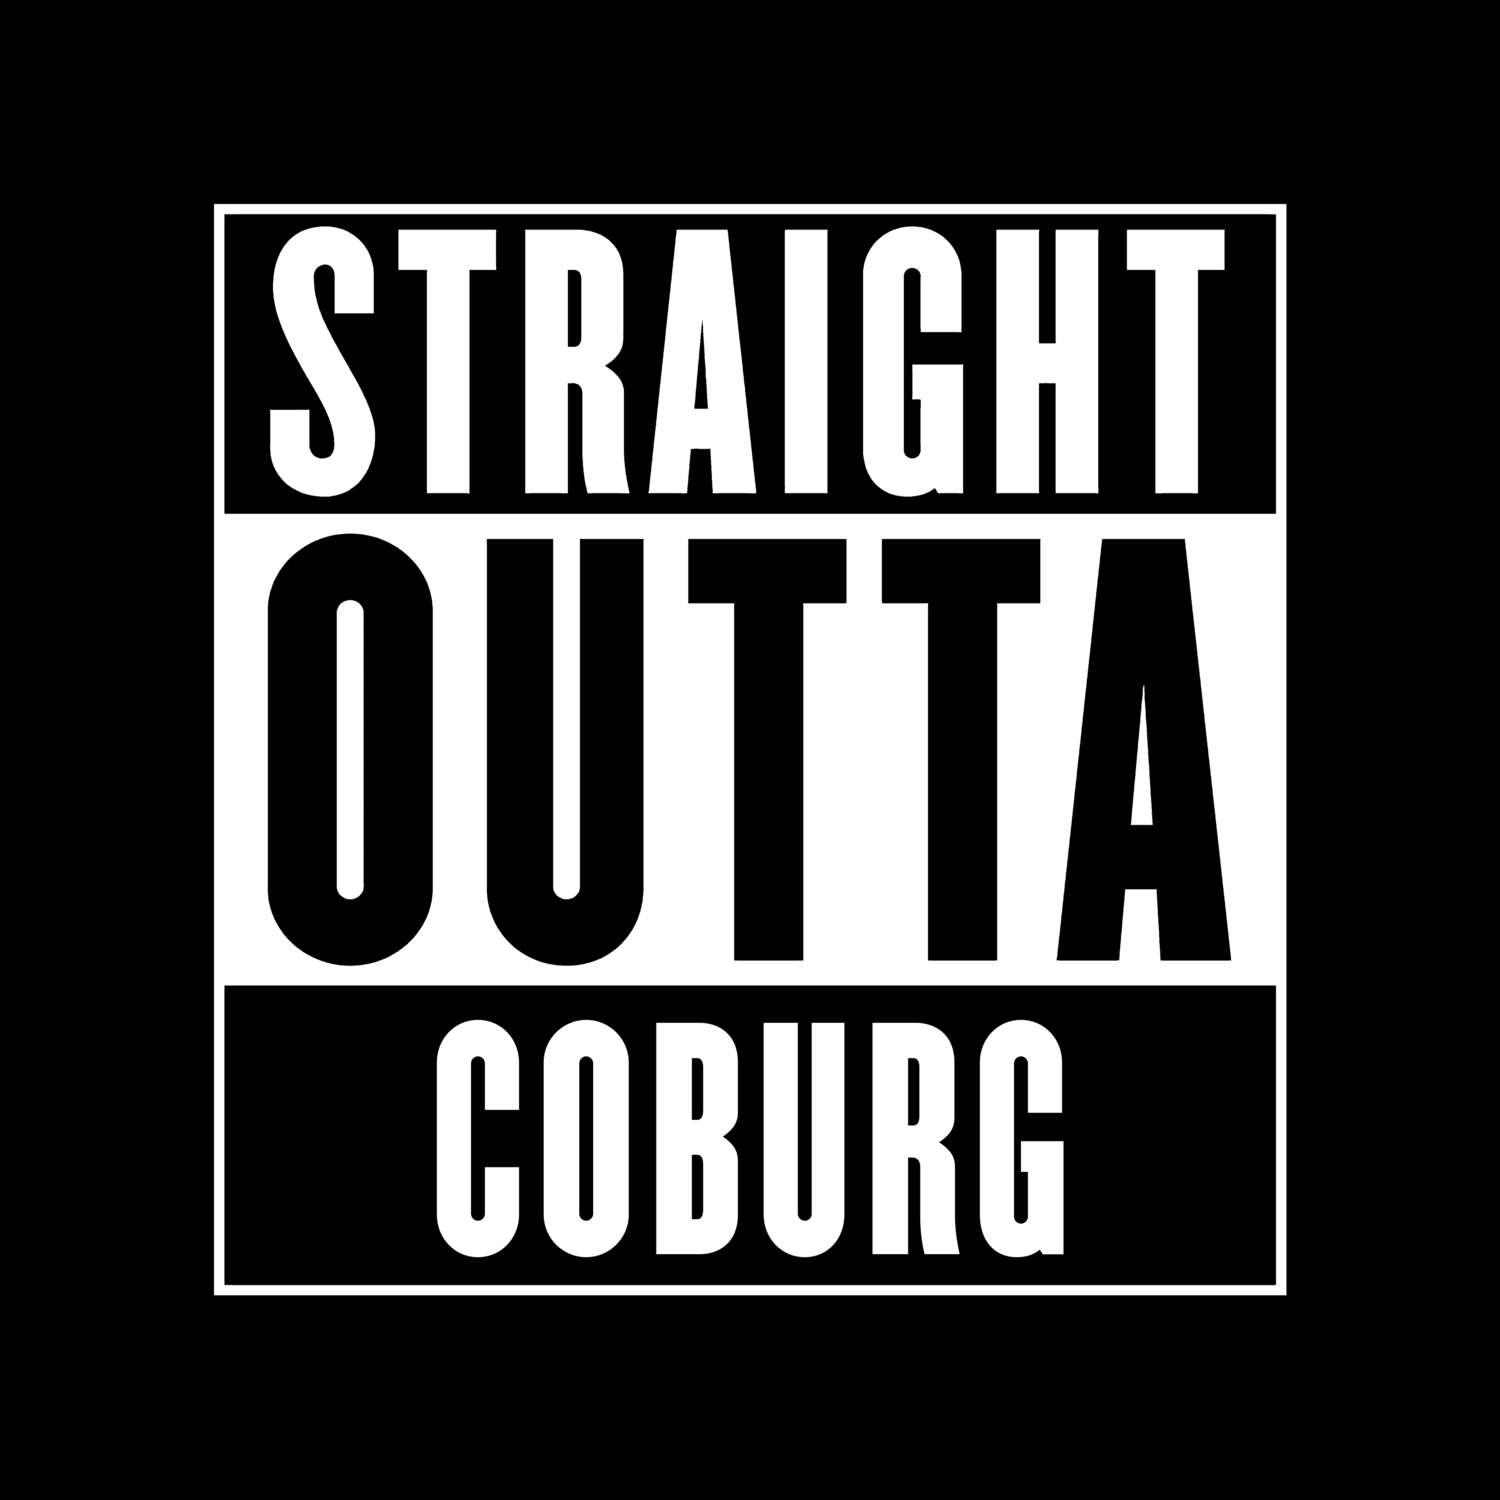 Coburg T-Shirt »Straight Outta«